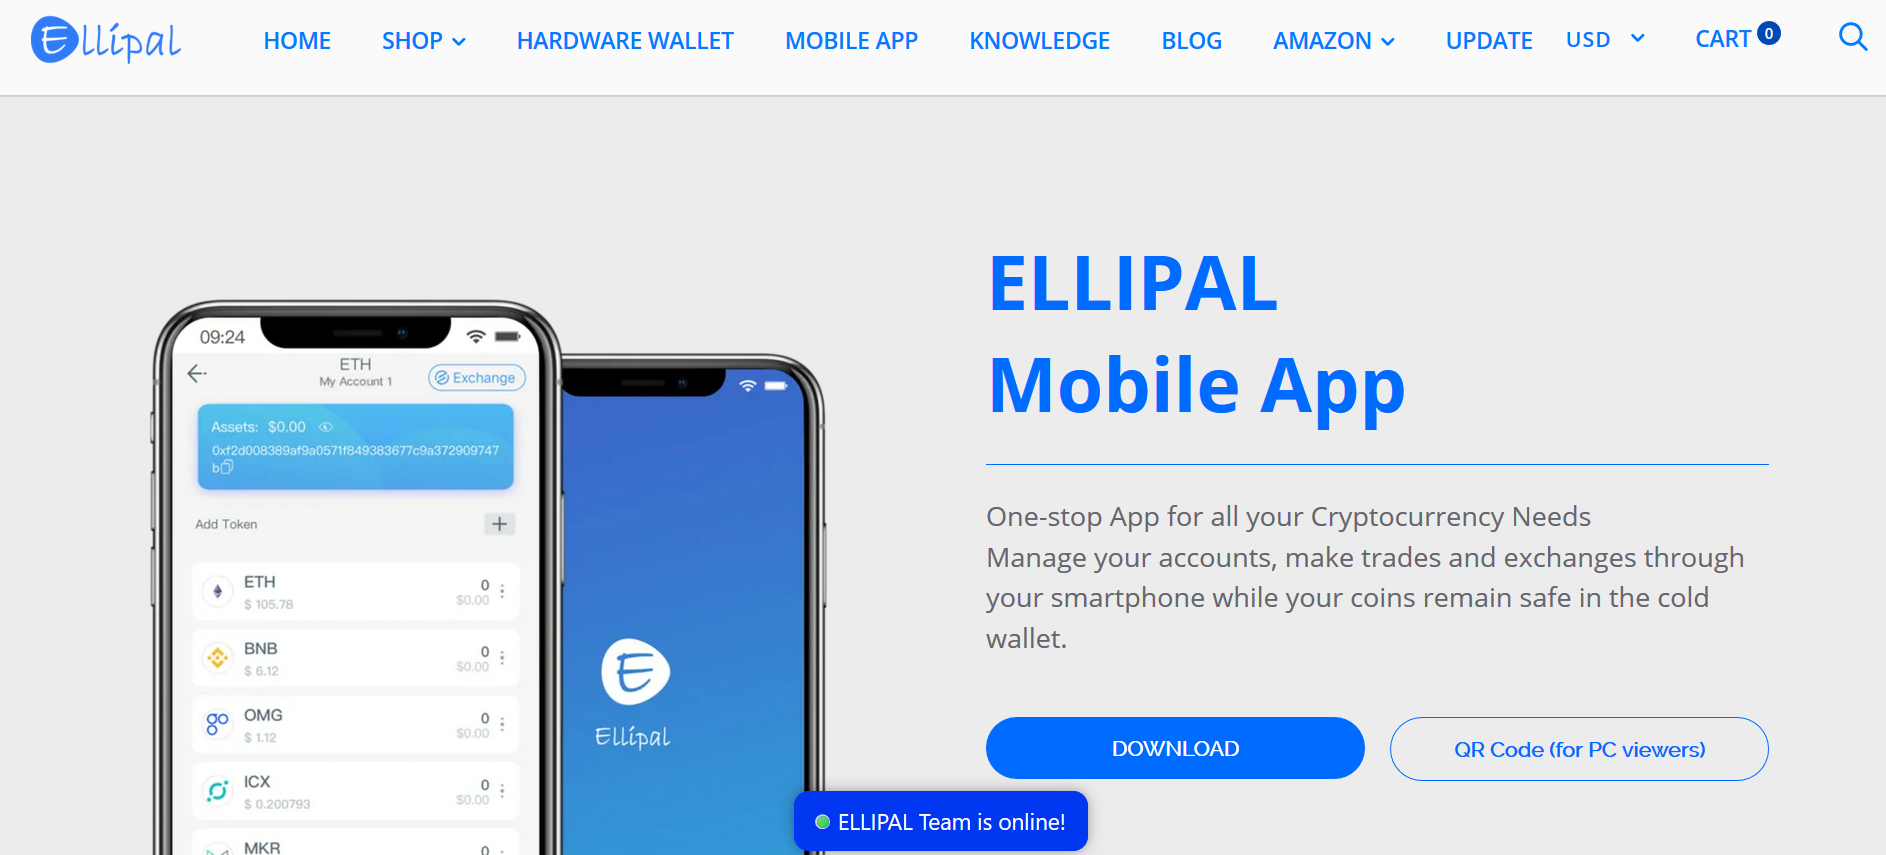 ELLIPAL Mobile App